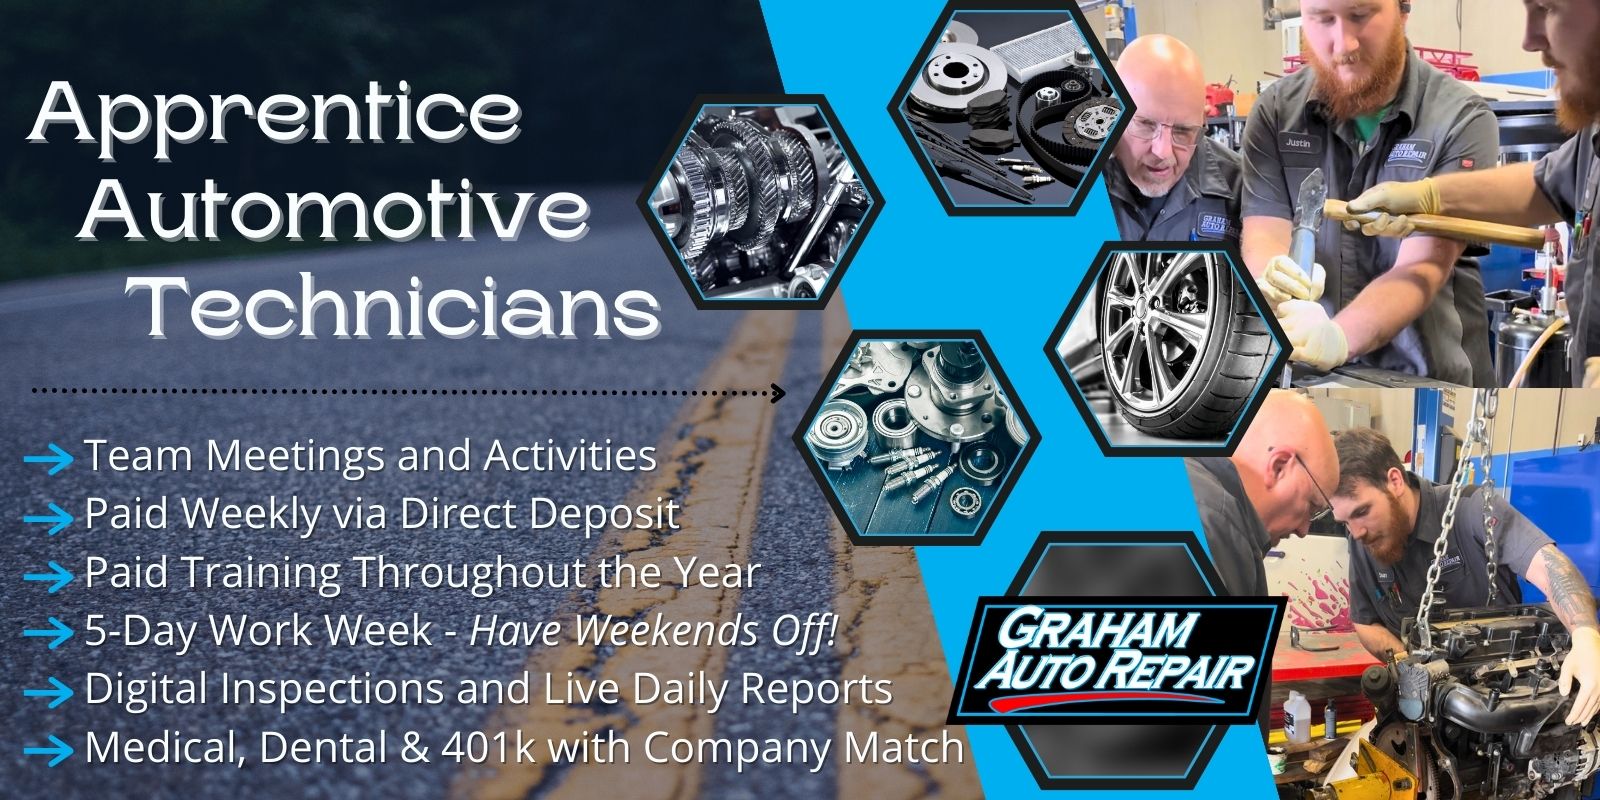 Apprentice Technician Job at Graham Auto Repair